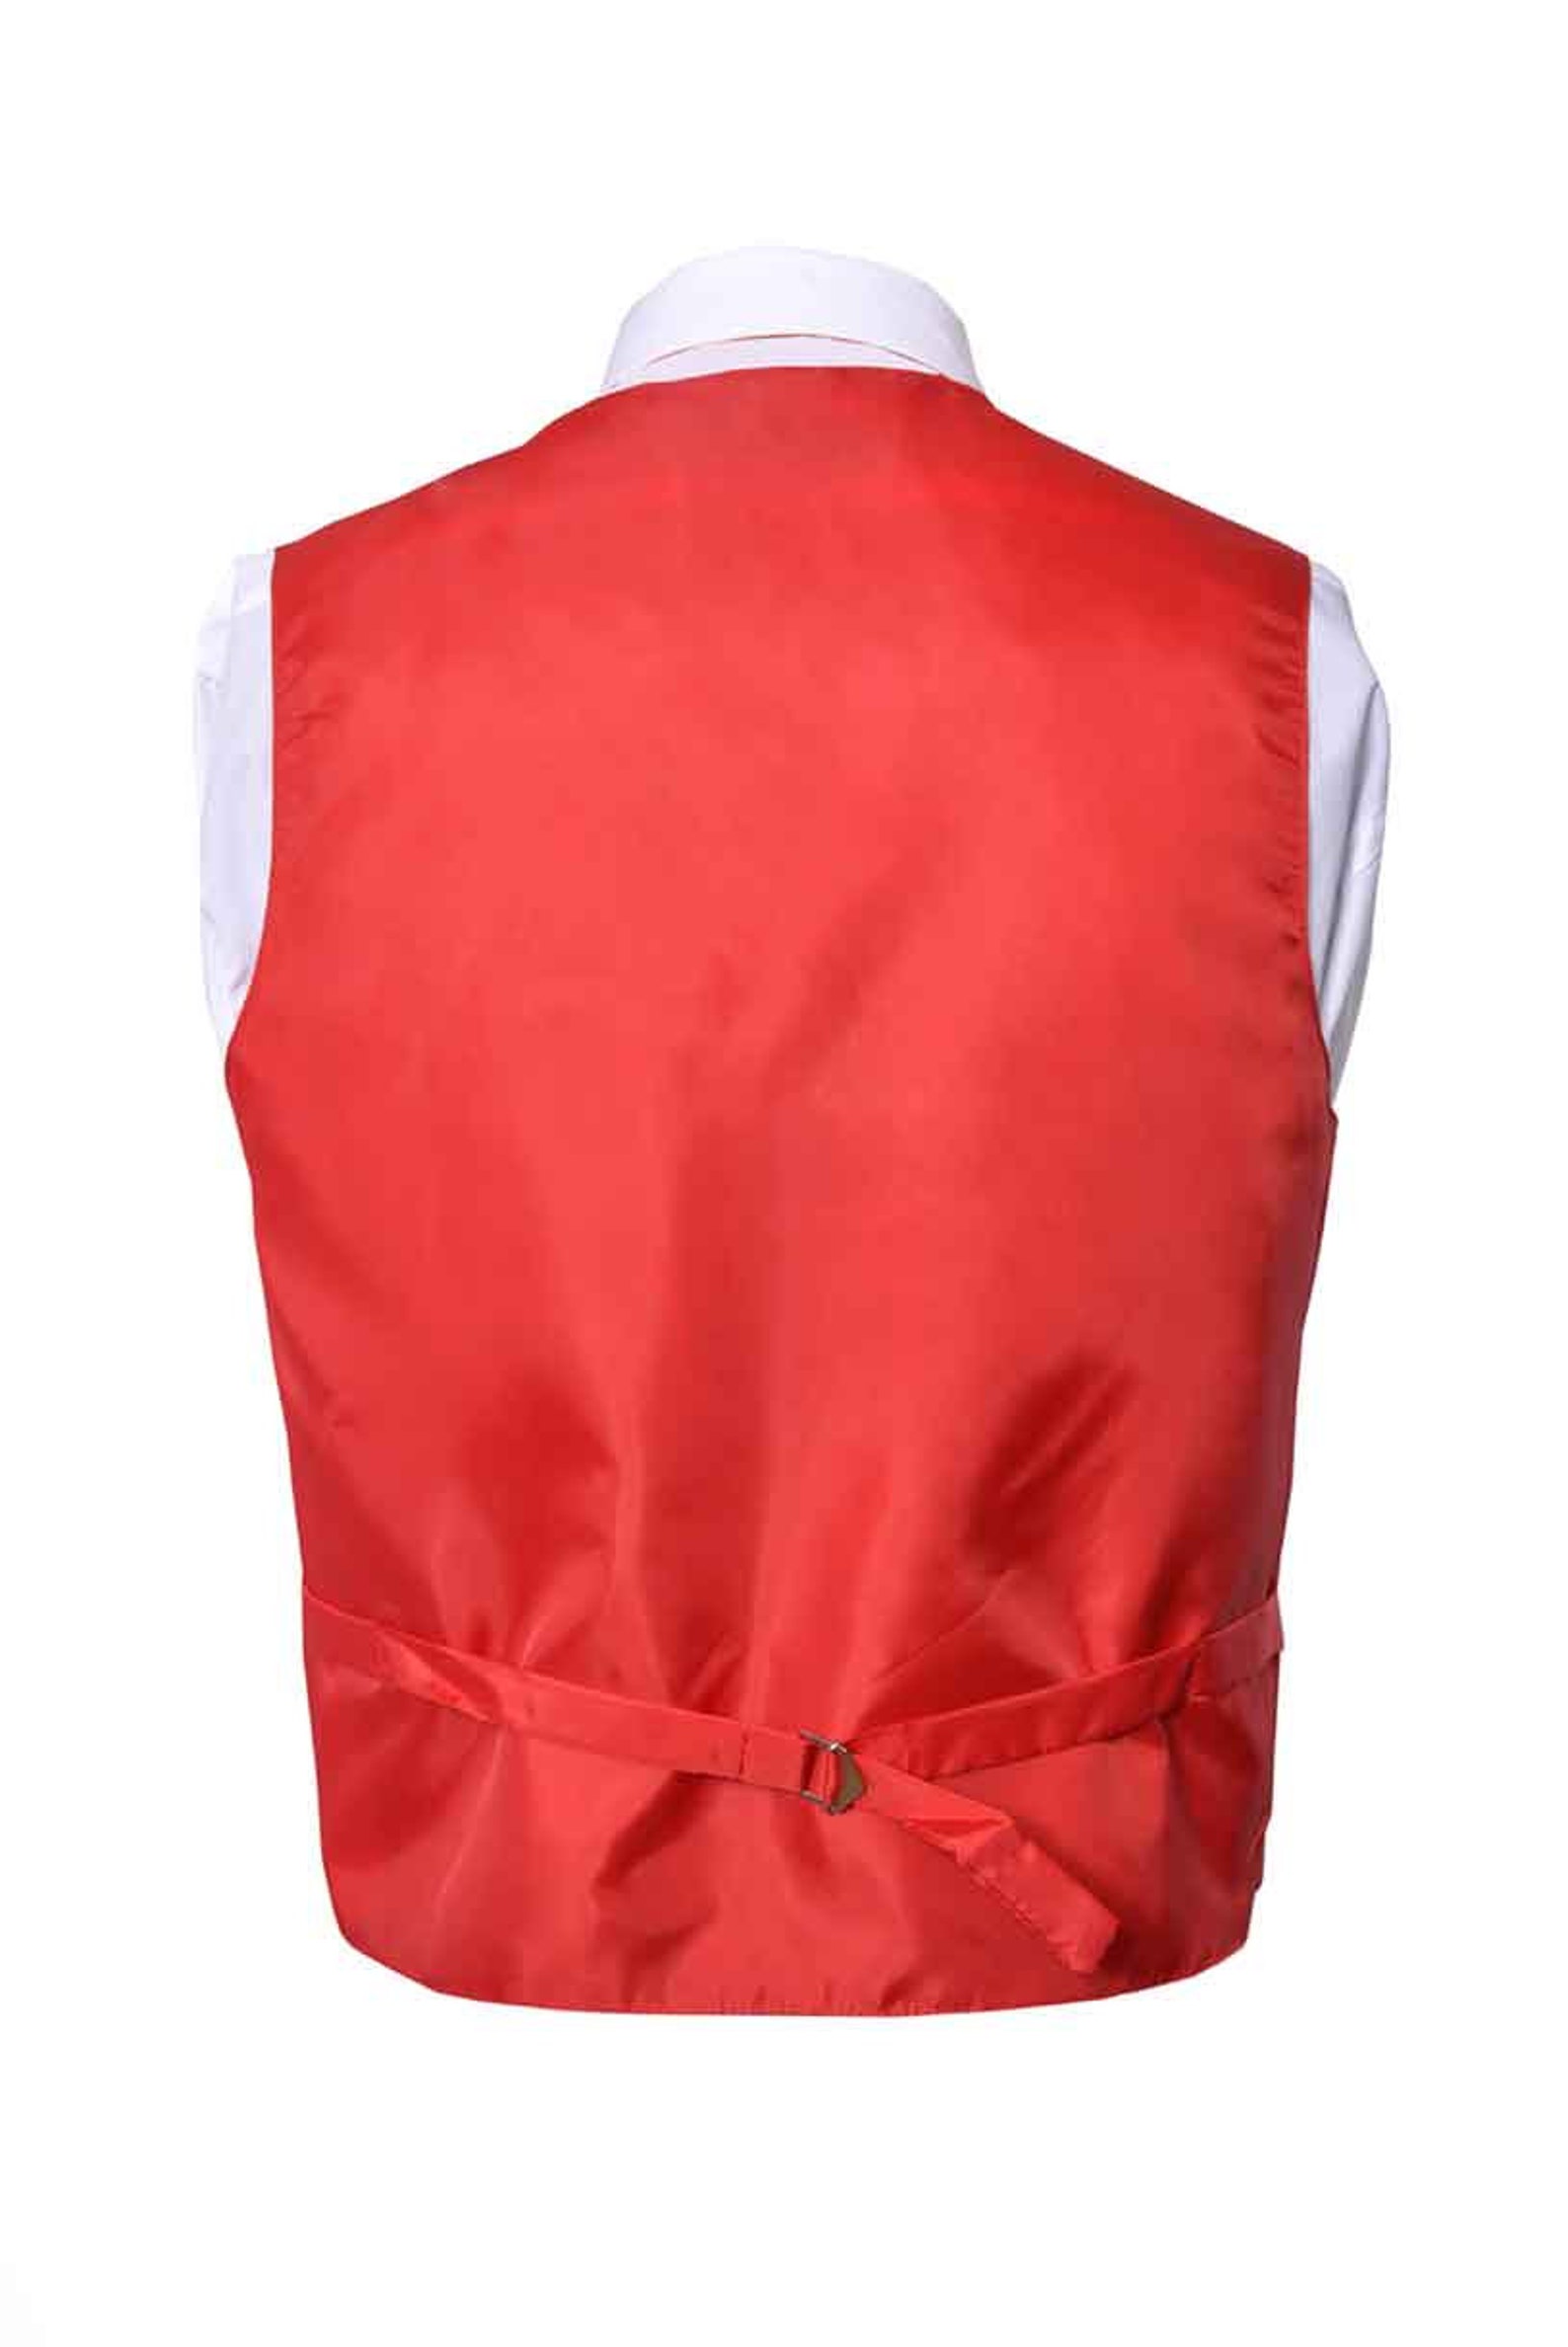 Men's Premium Solid Red Formal Vest Necktie Bow Tie | Etsy